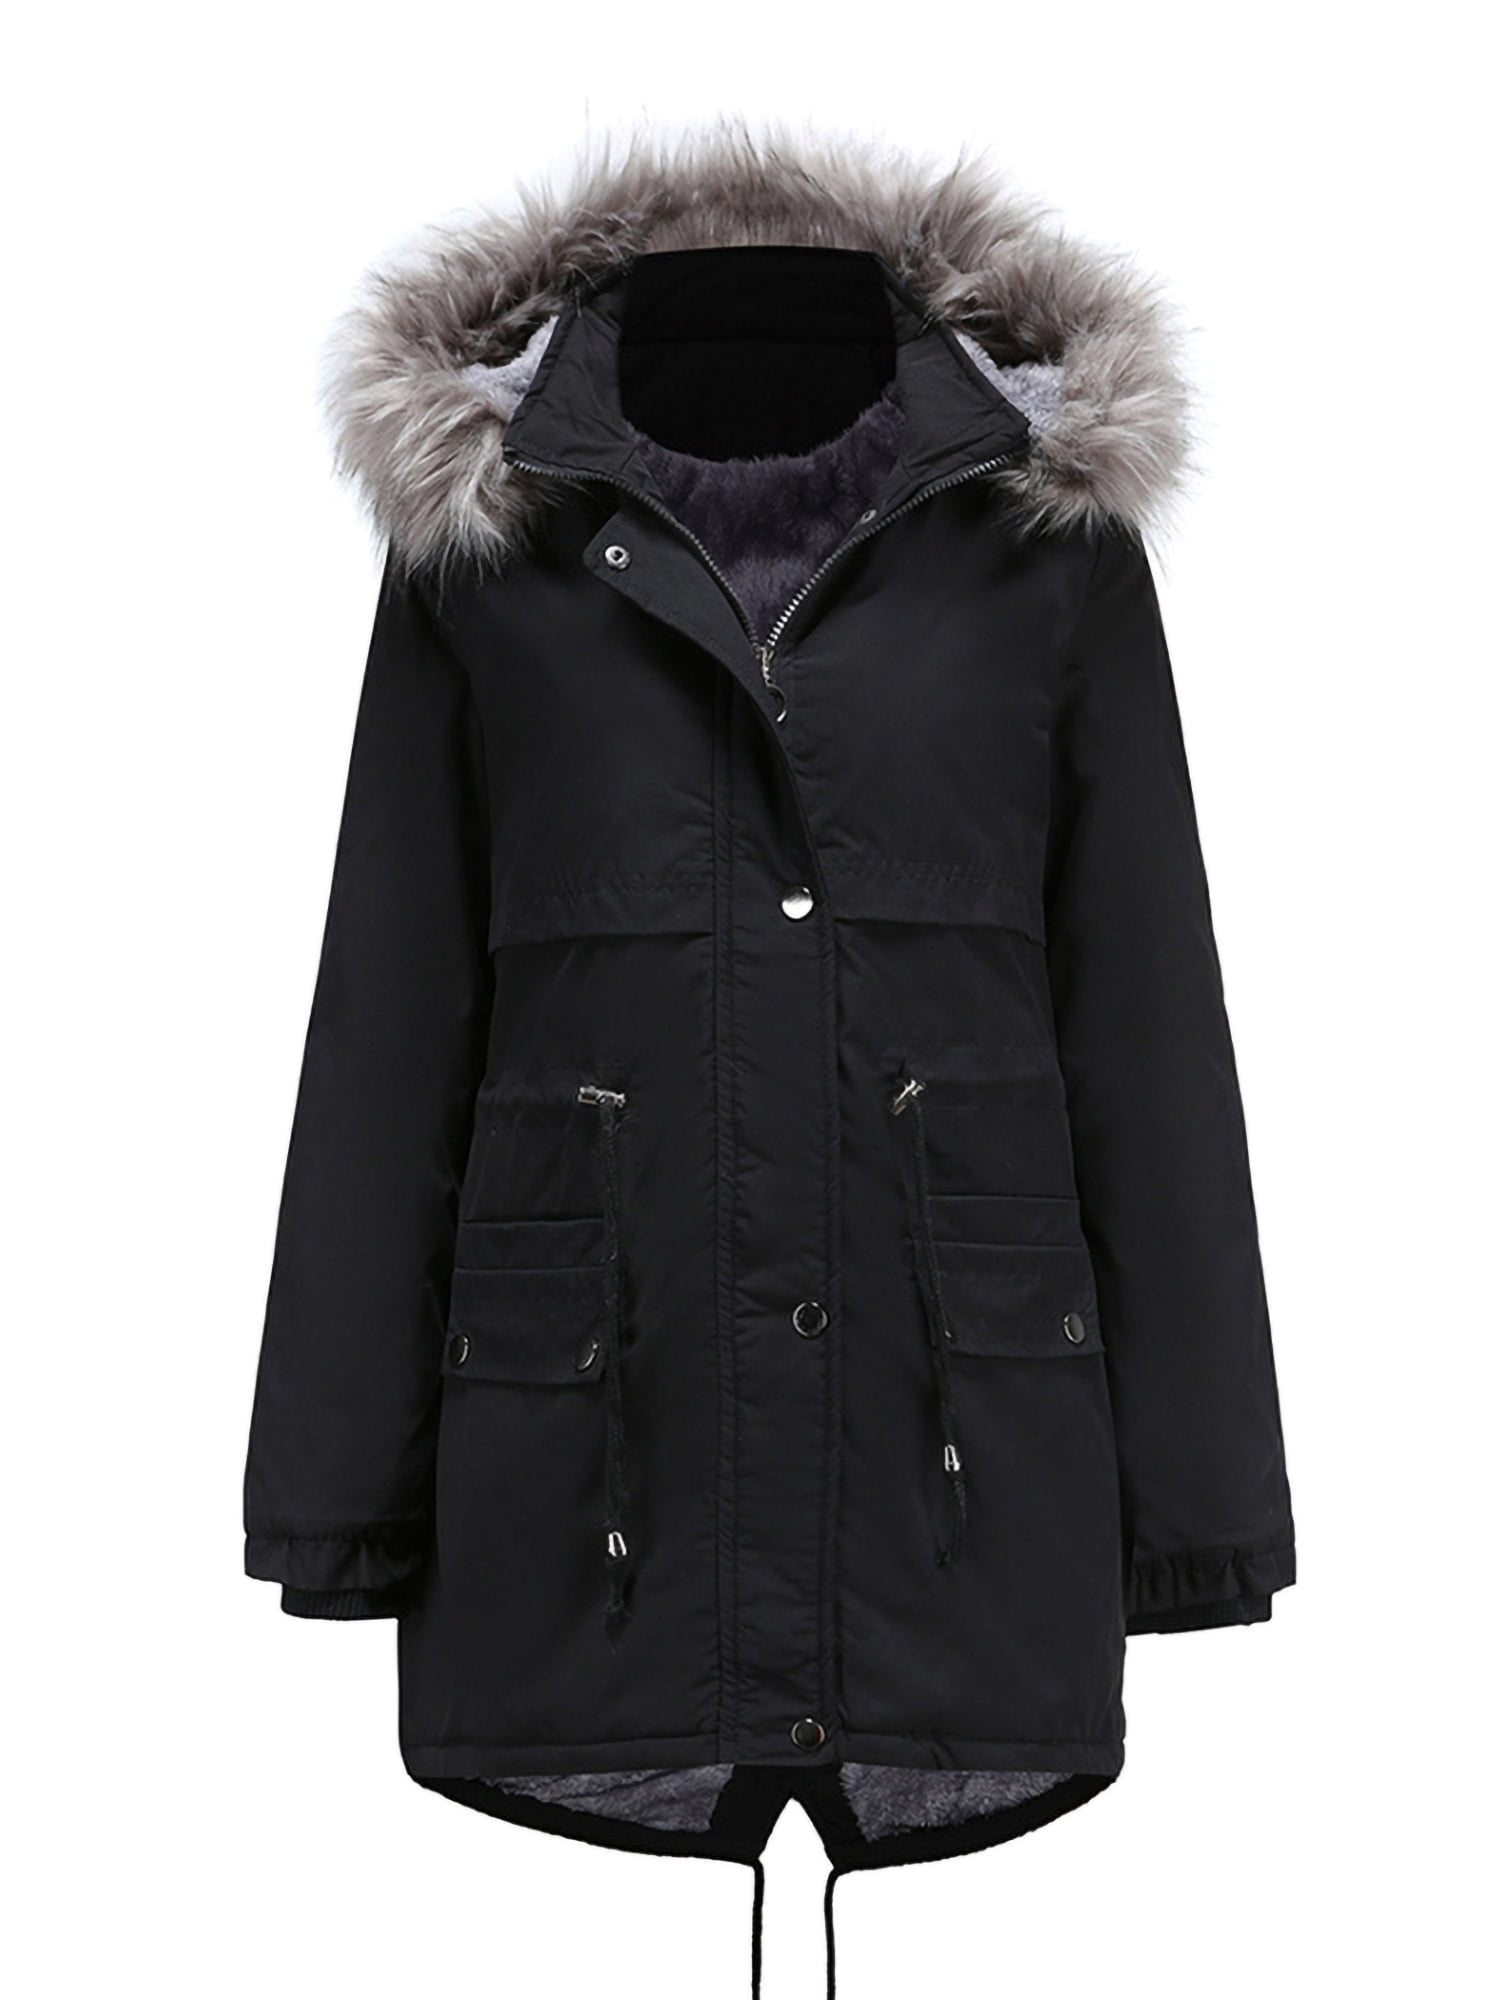 SFE Women Hoodie Coat Print Winter Warm Plus Velvet Jacket Outwear Overcoat with Pocket